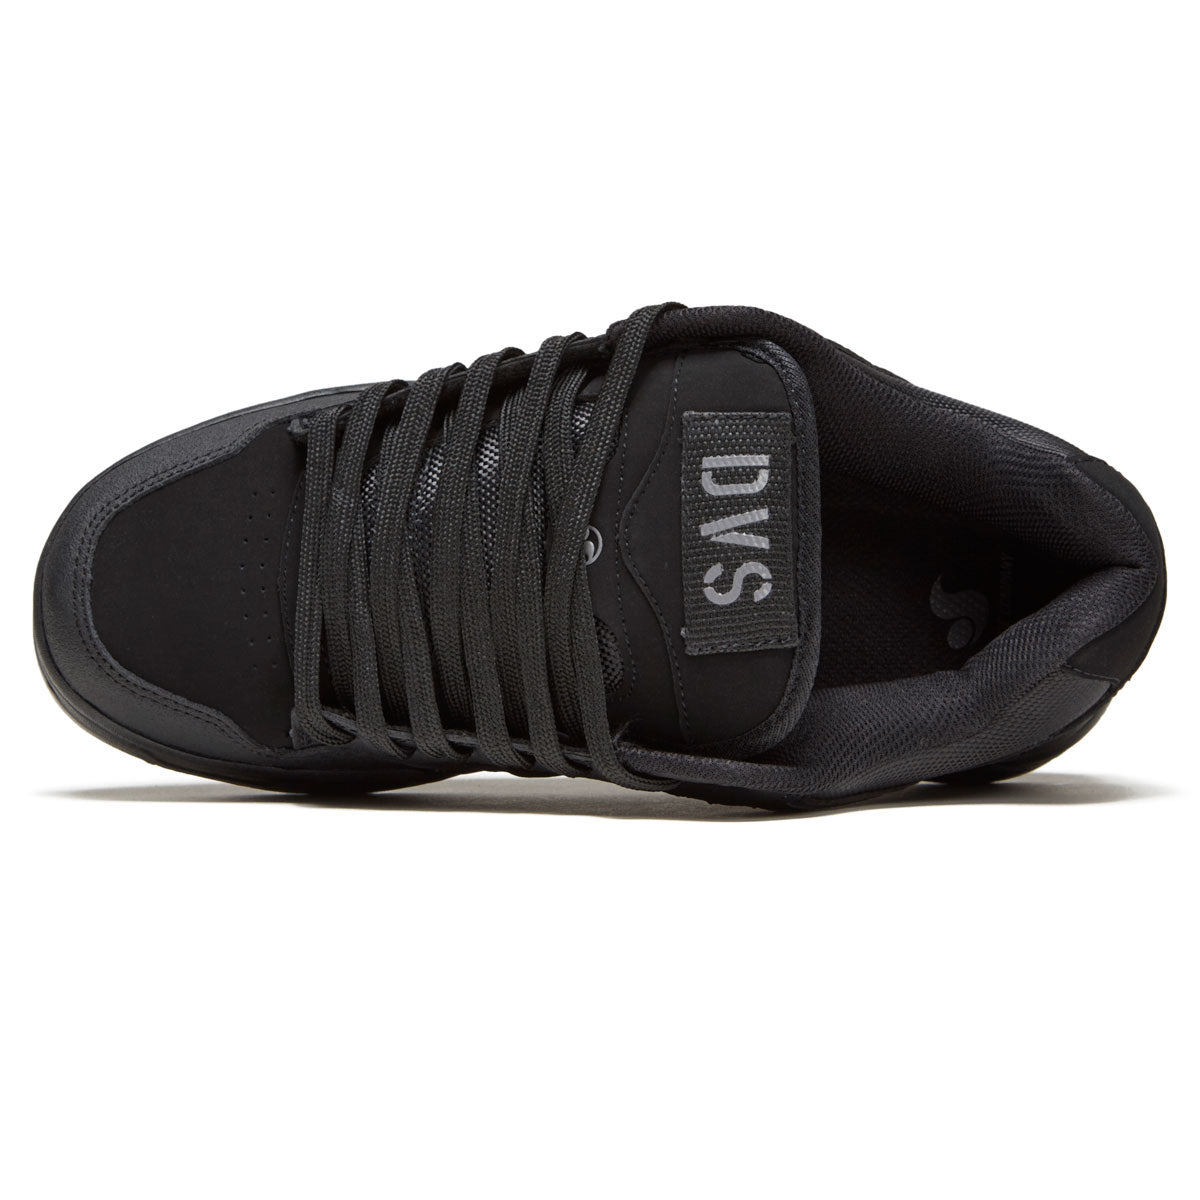 DVS Enduro Heir Shoes - Black/Black Leather image 3